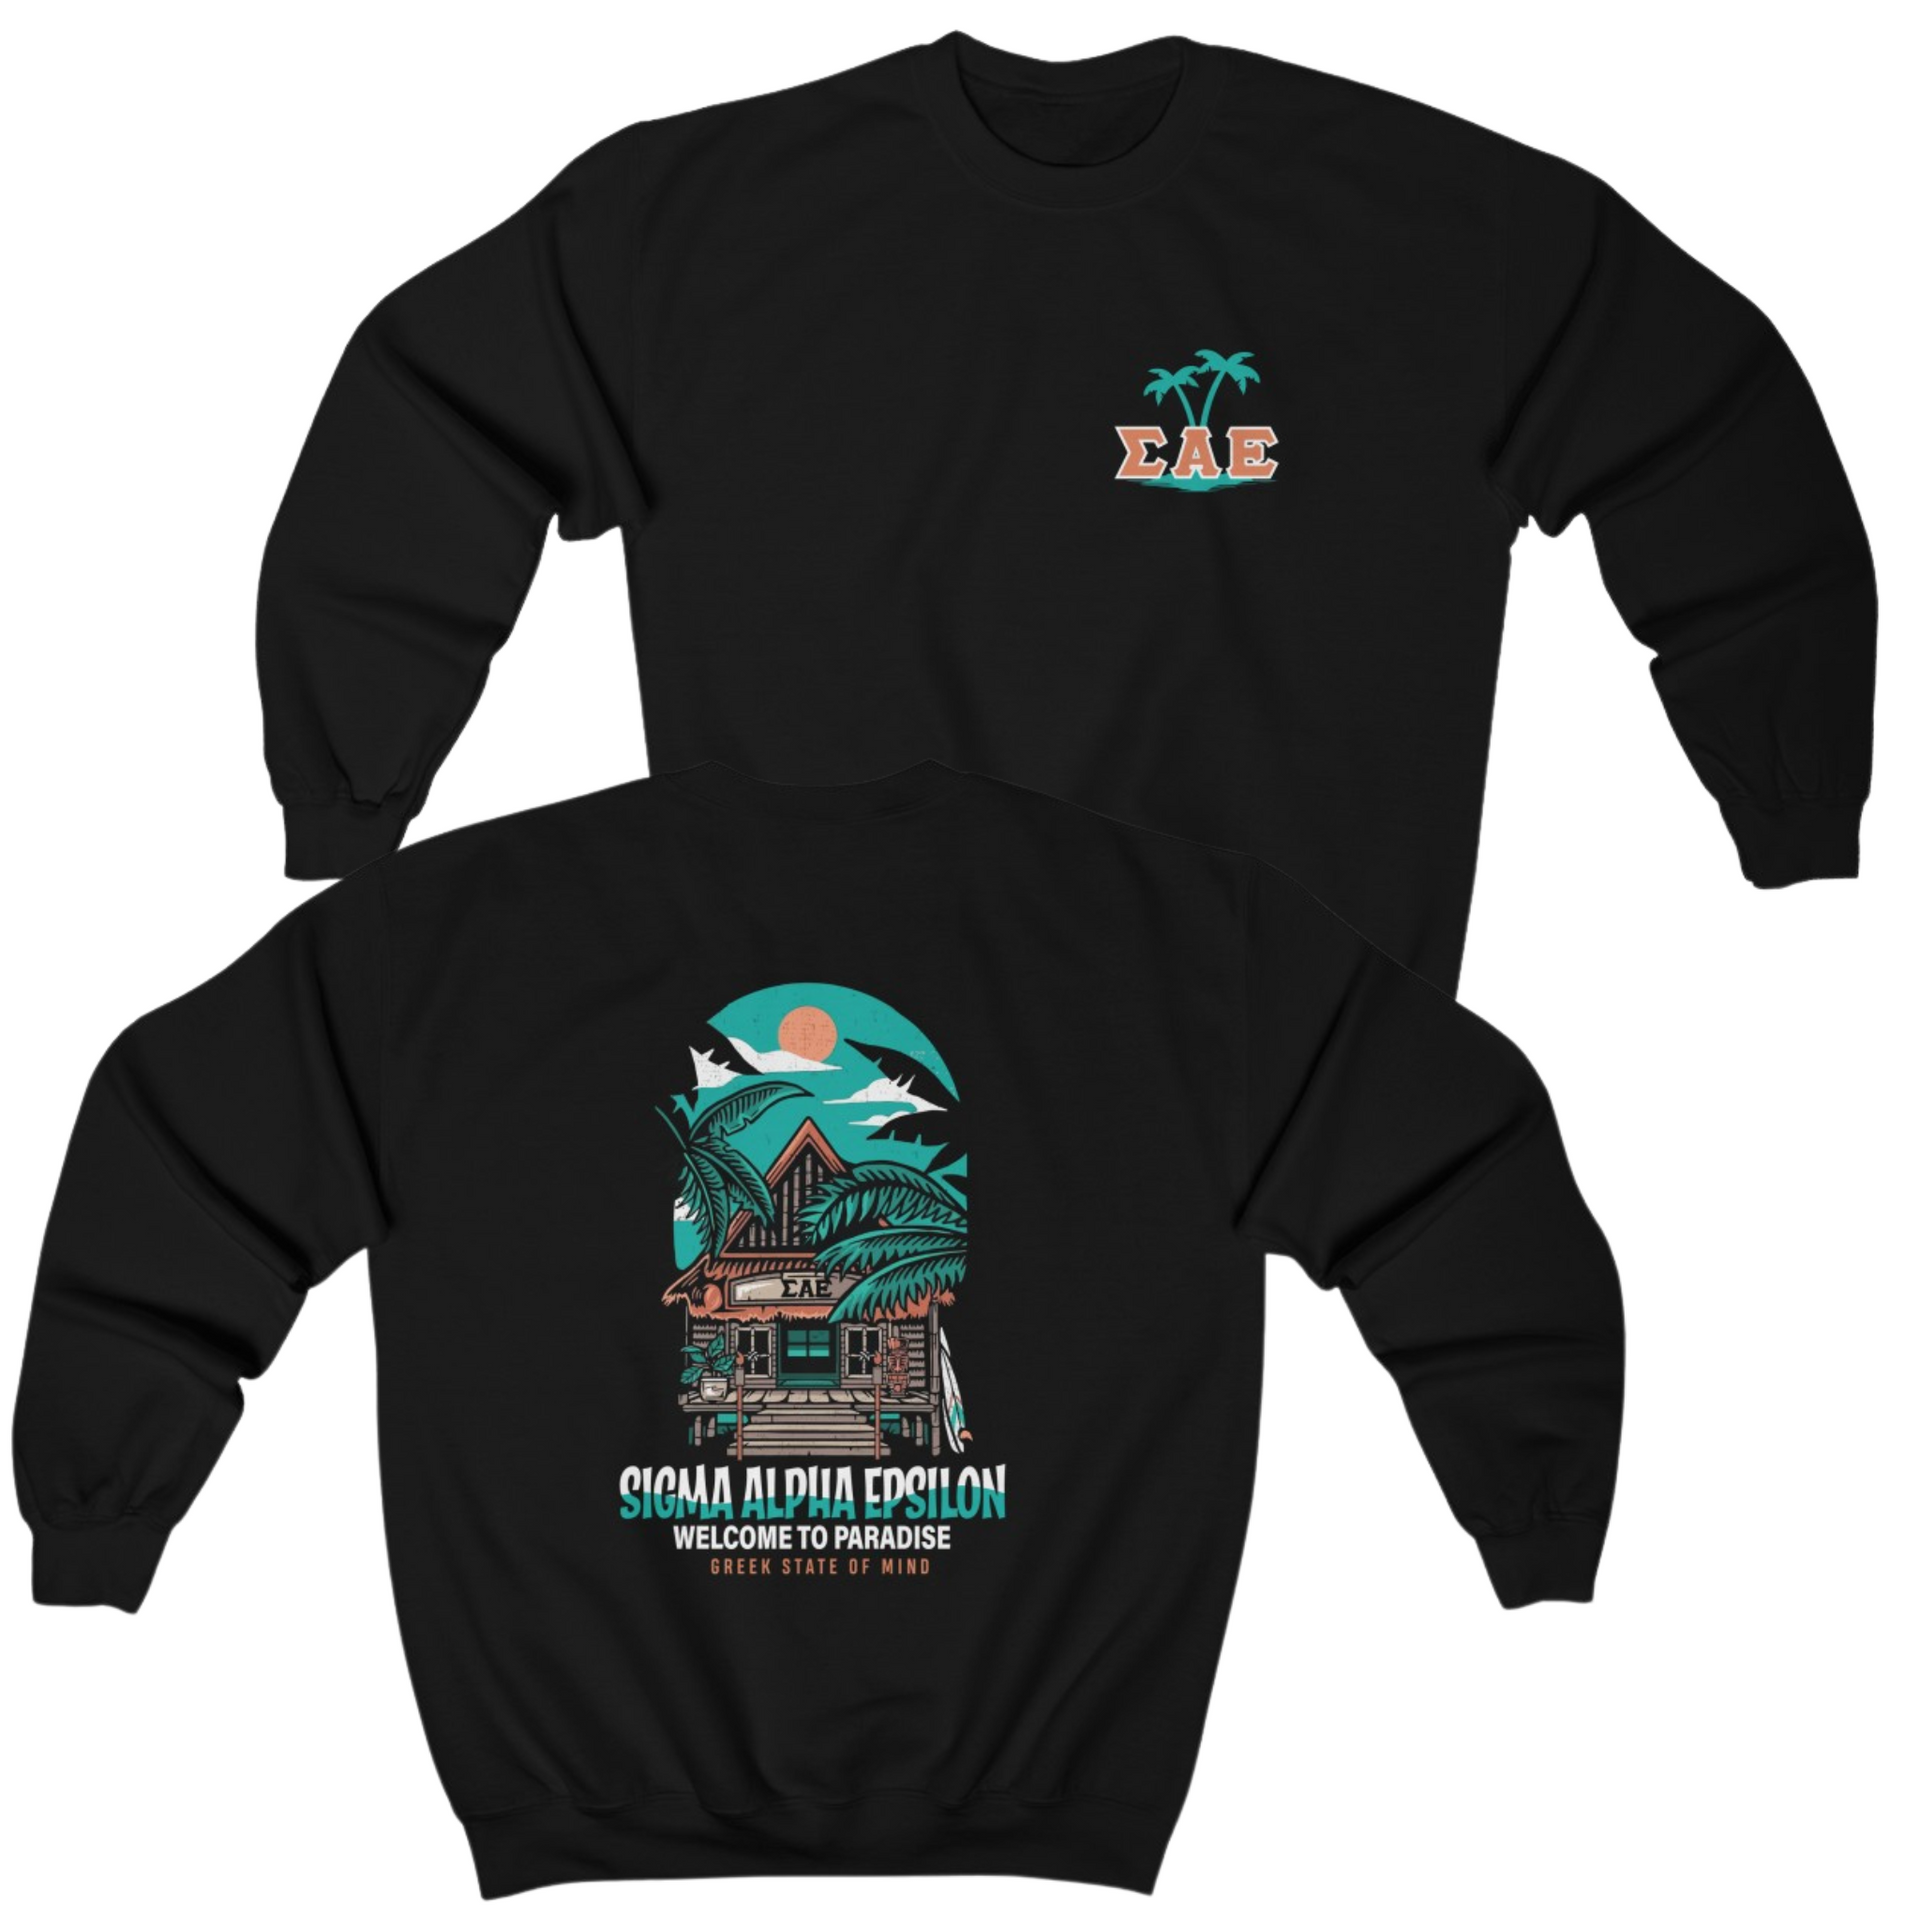 Black Sigma Alpha Epsilon Graphic Crewneck Sweatshirt | Welcome to Paradise | Sigma Alpha Epsilon Clothing and Merchandise